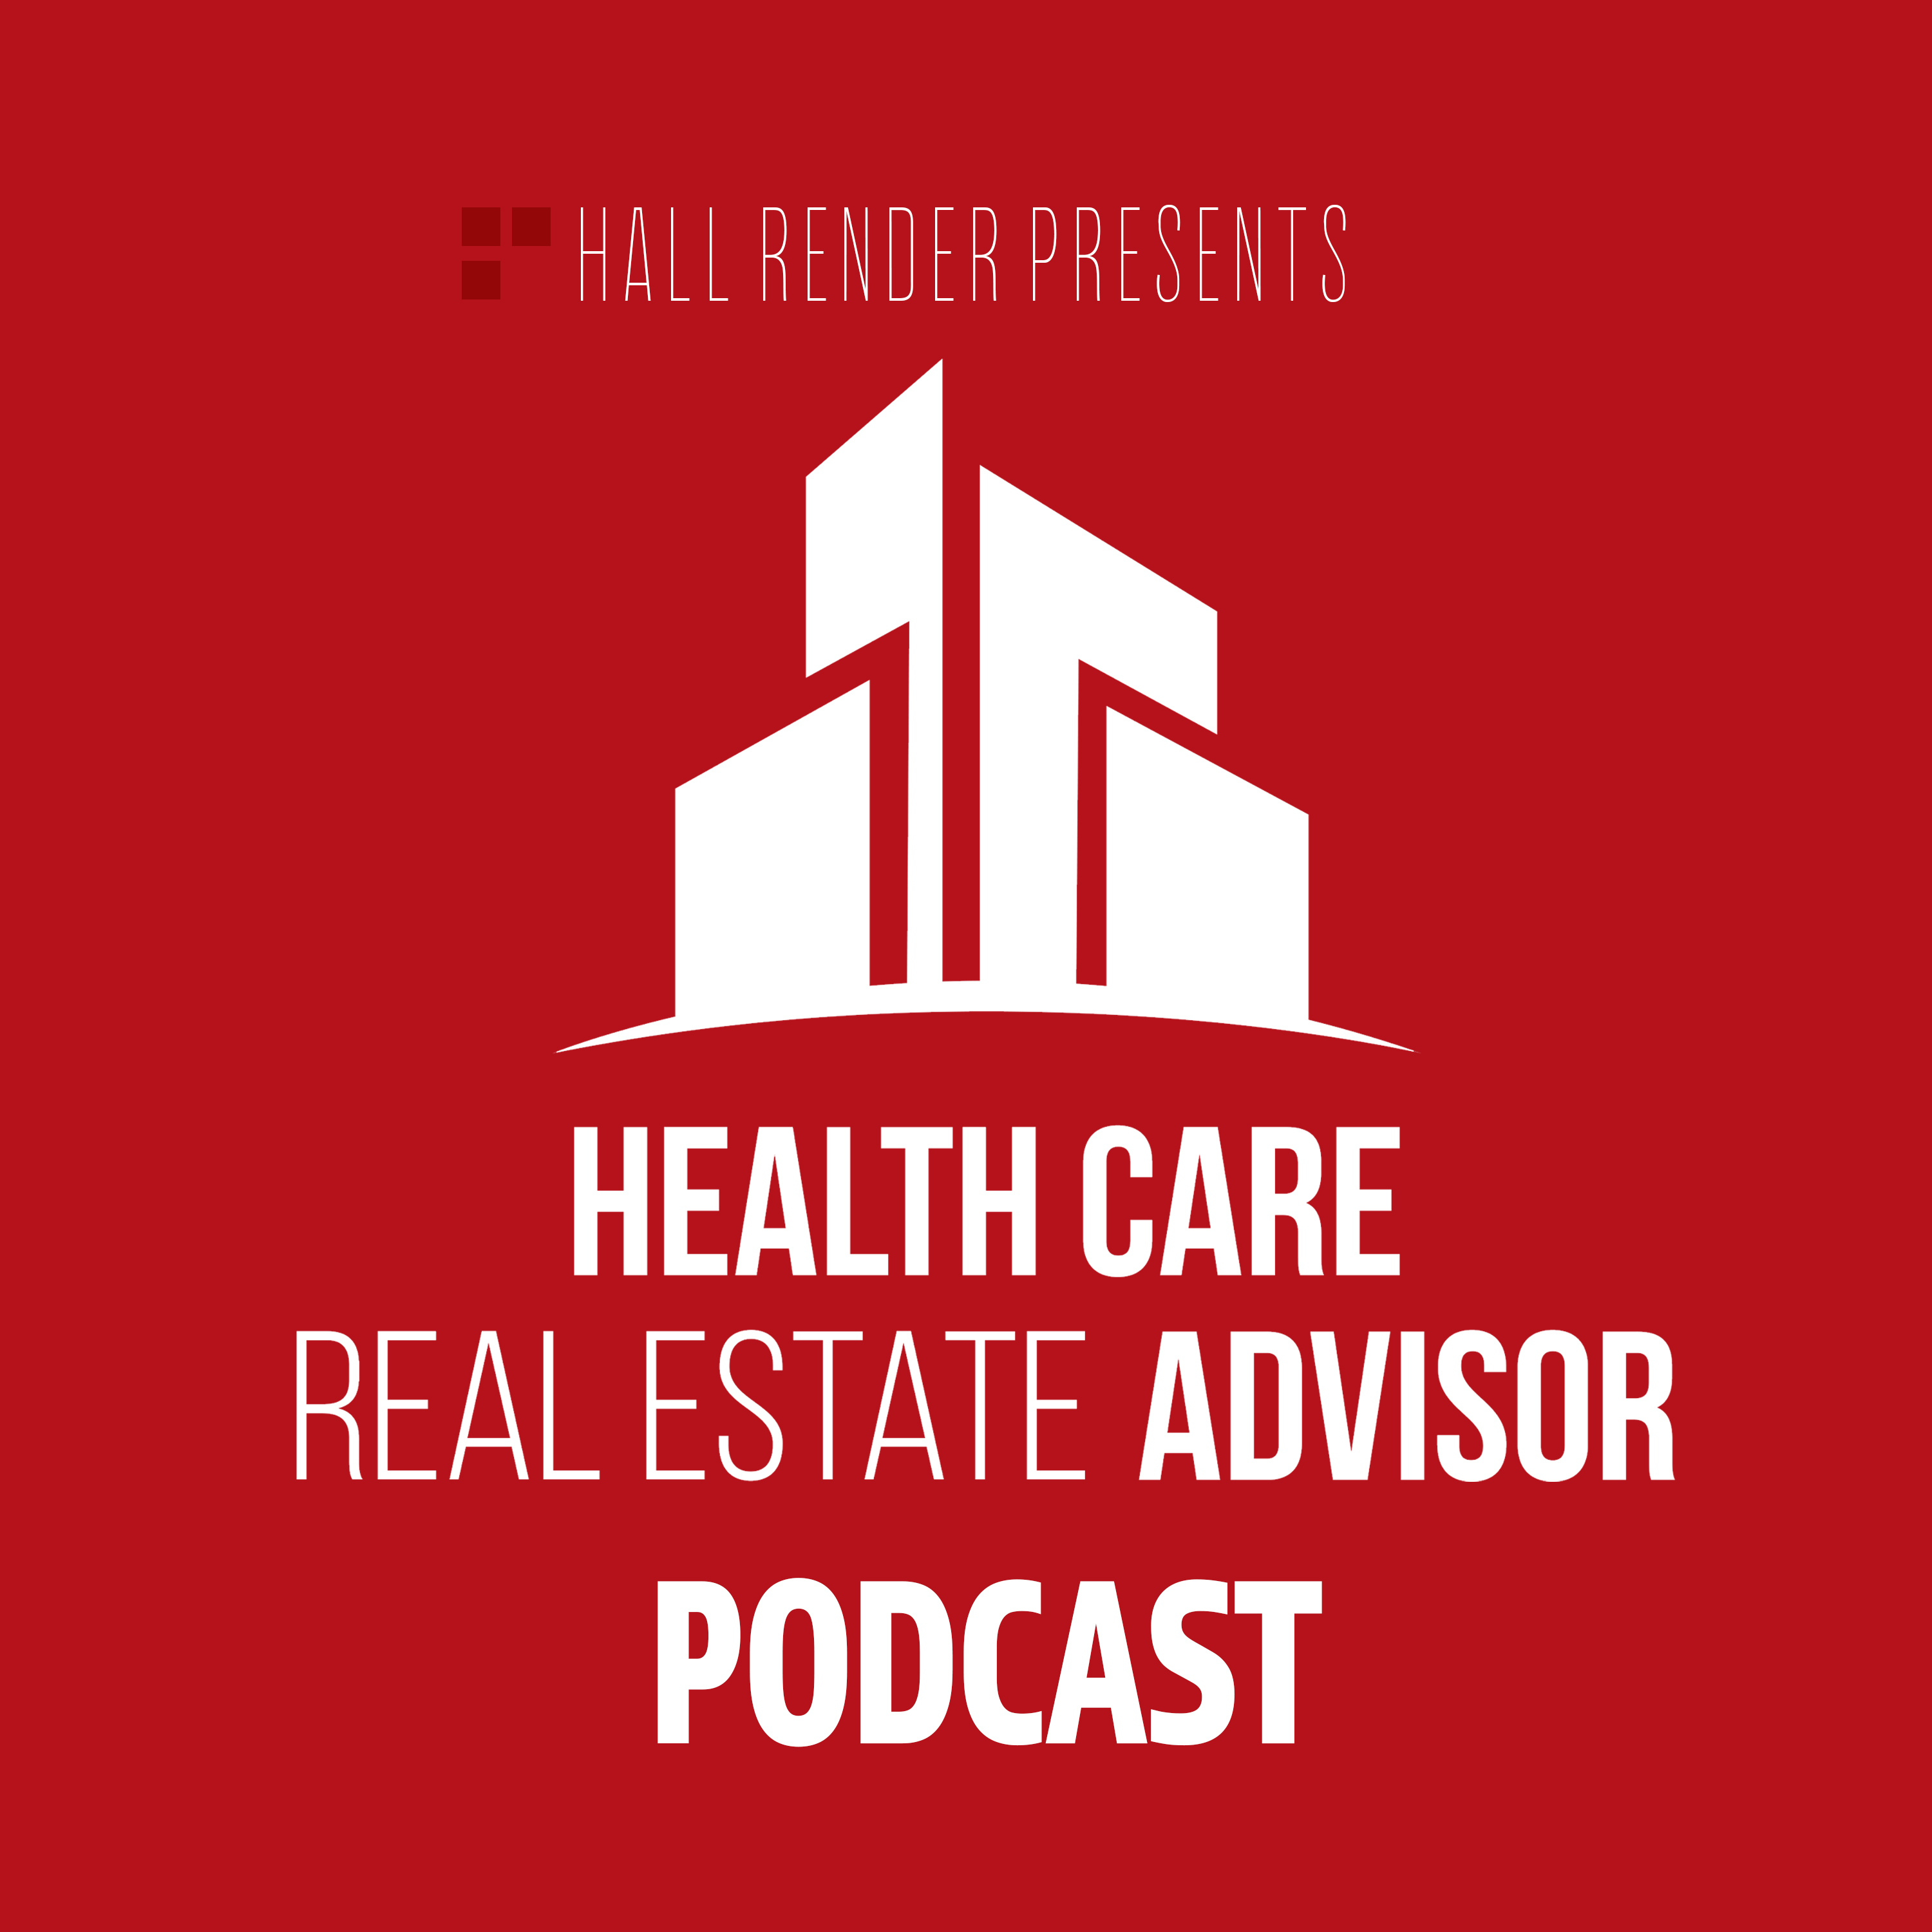 Health Care Real Estate Advisor – Hall Render Podcast